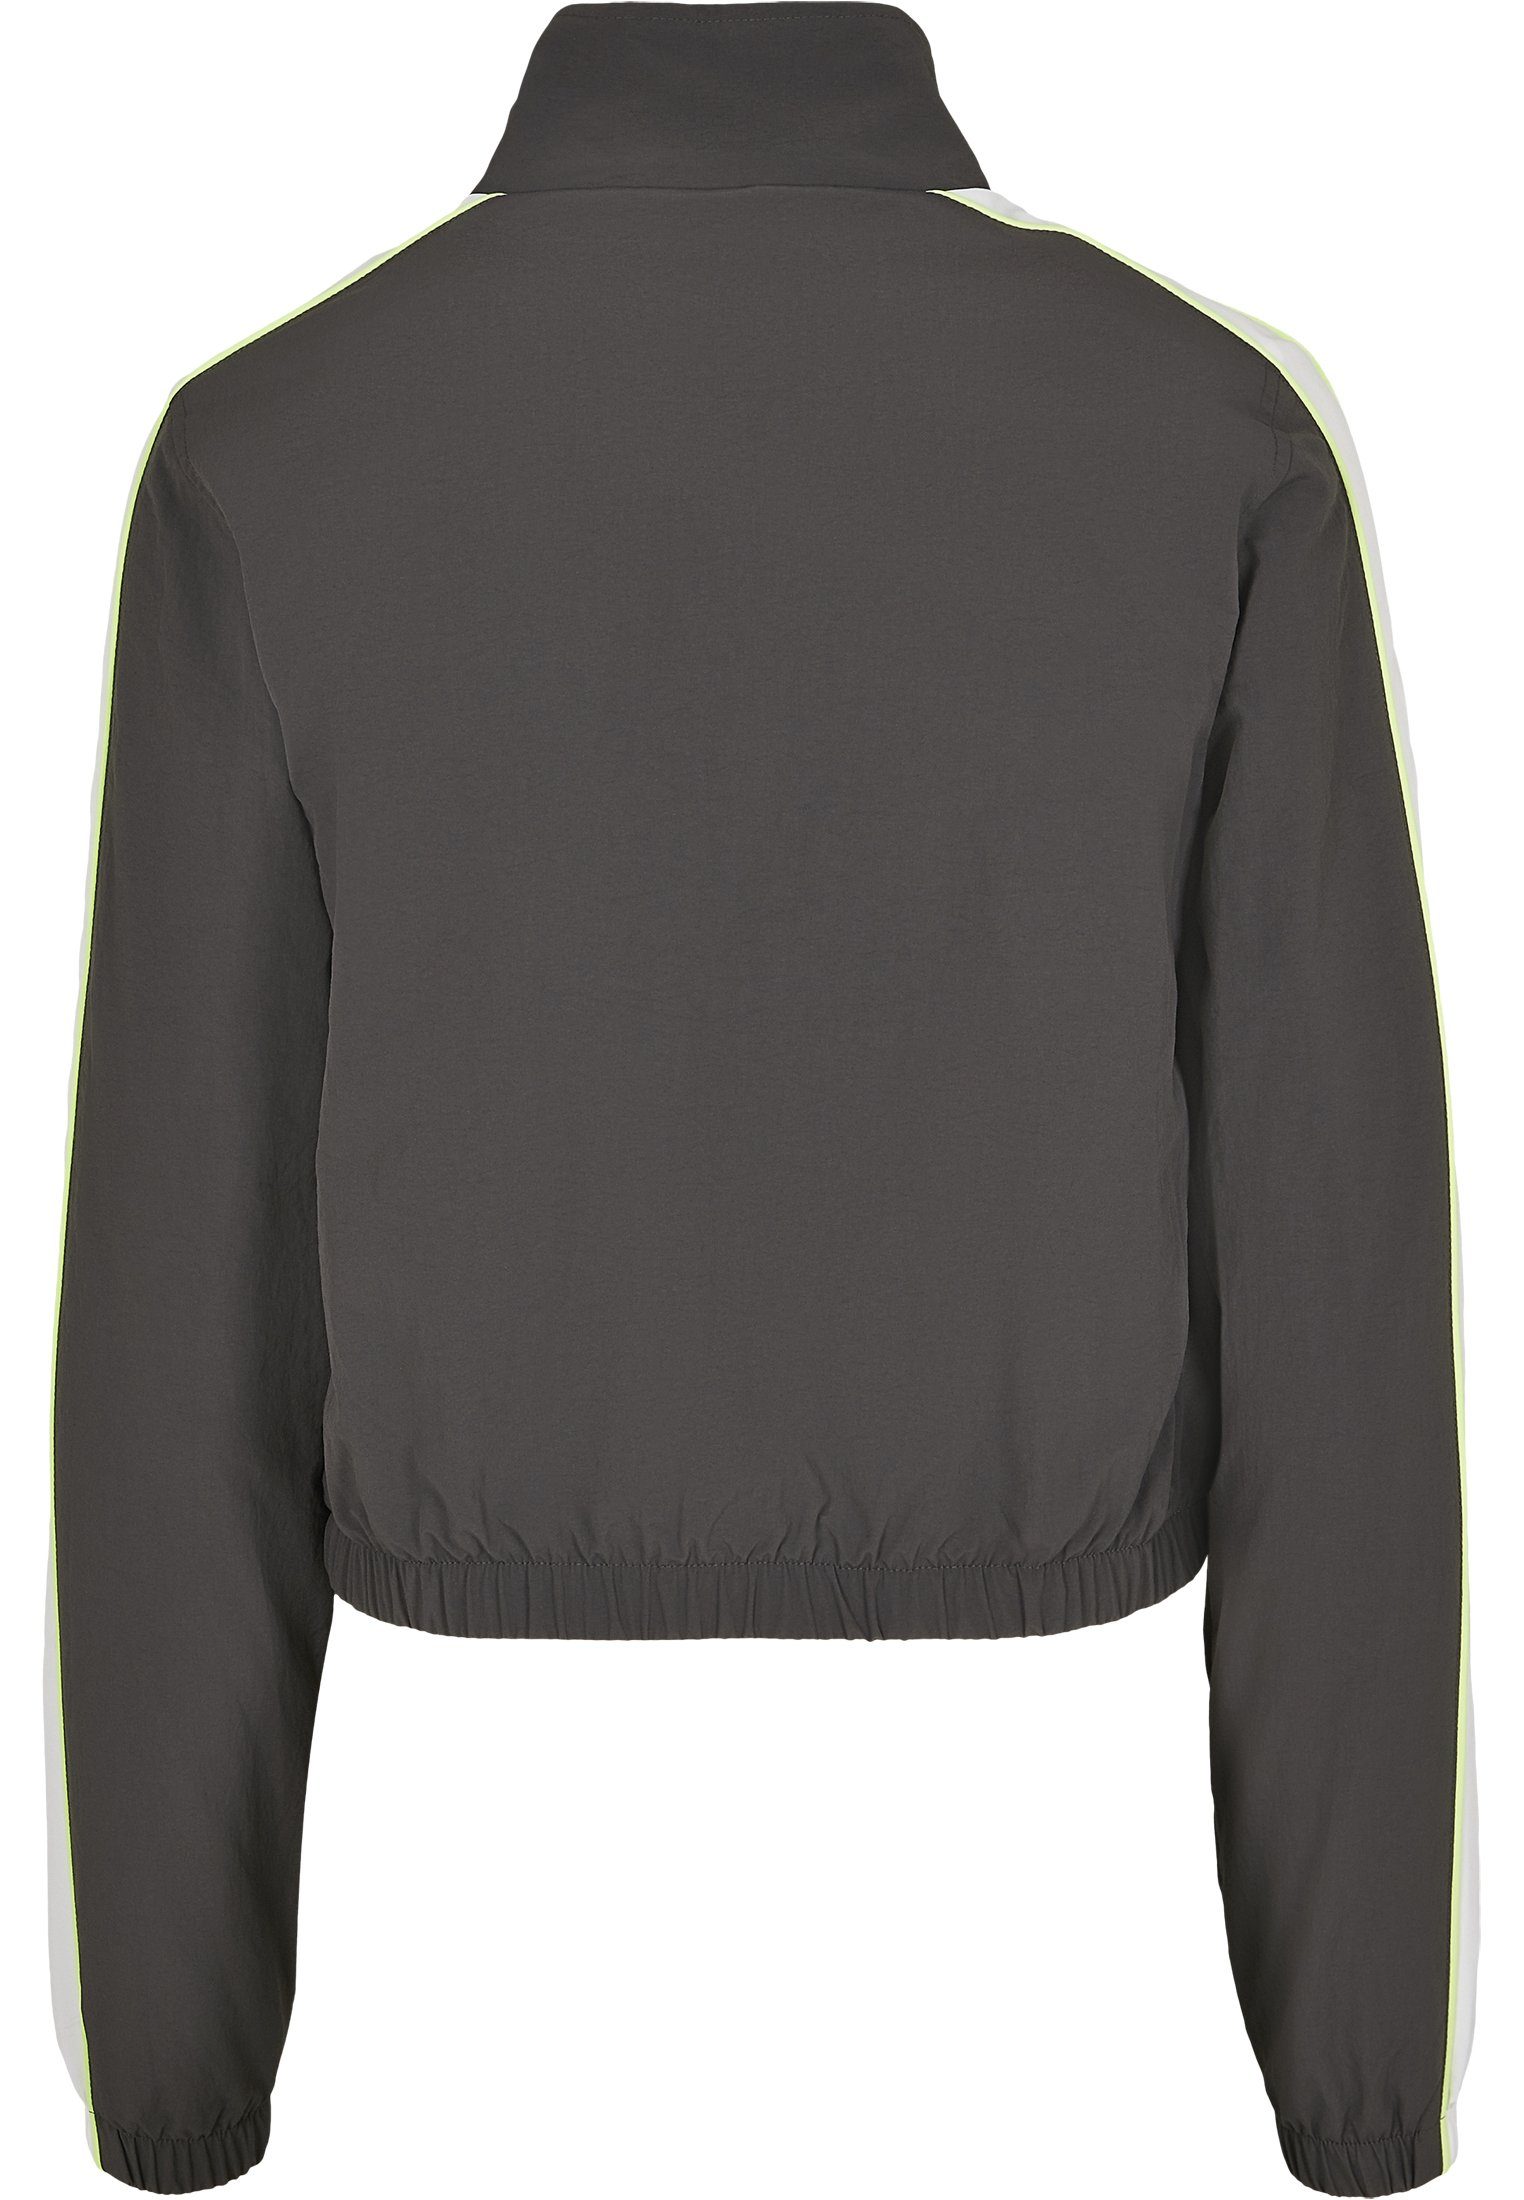 URBAN Track darkshadow/electriclime Ladies Outdoorjacke Piped CLASSICS Jacket (1-St) Damen Short